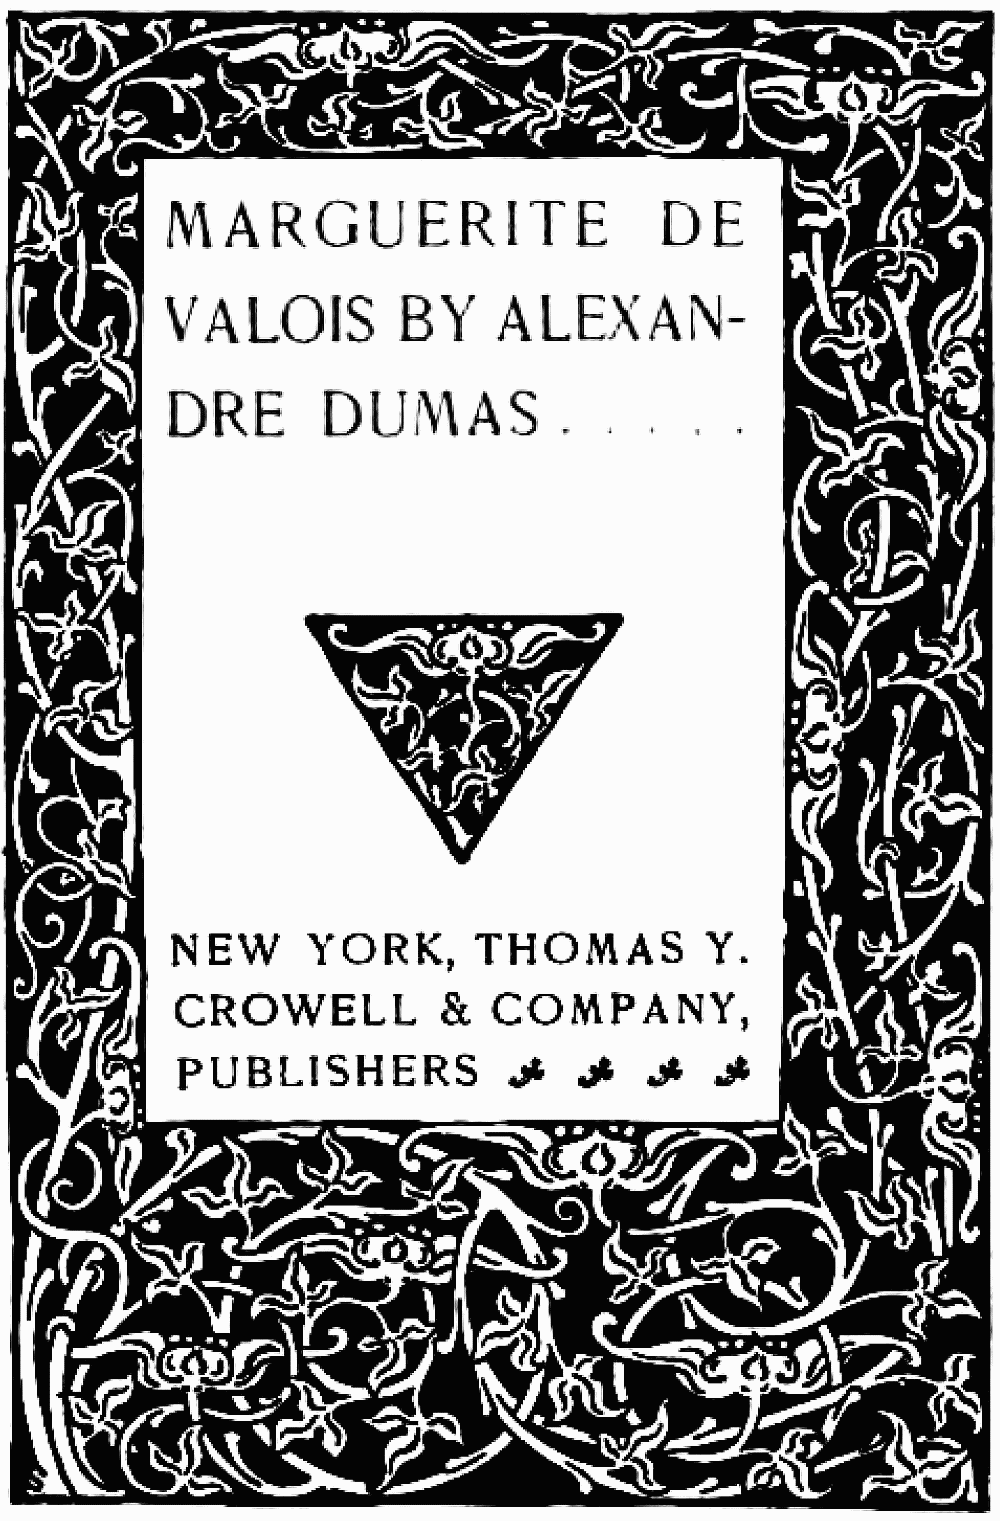 The Project Gutenberg eBook of Marguerite de Valois, by Alexandre Dumas.